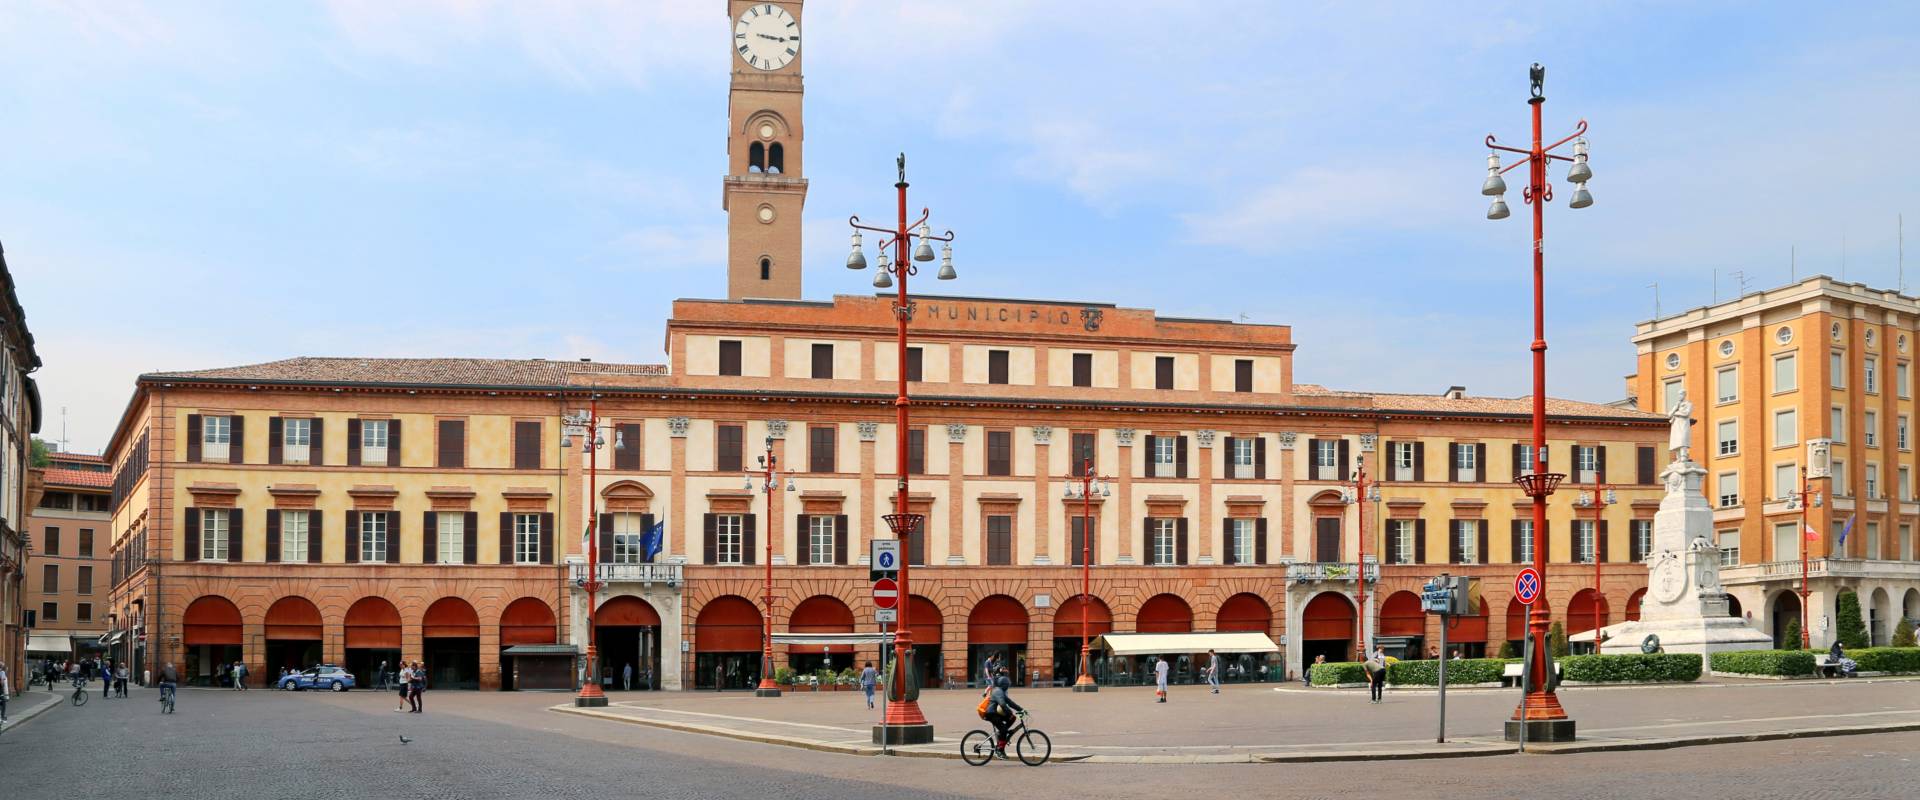 Forlì, piazza aurelio saffi, palazzo municipale 01 photo by Sailko